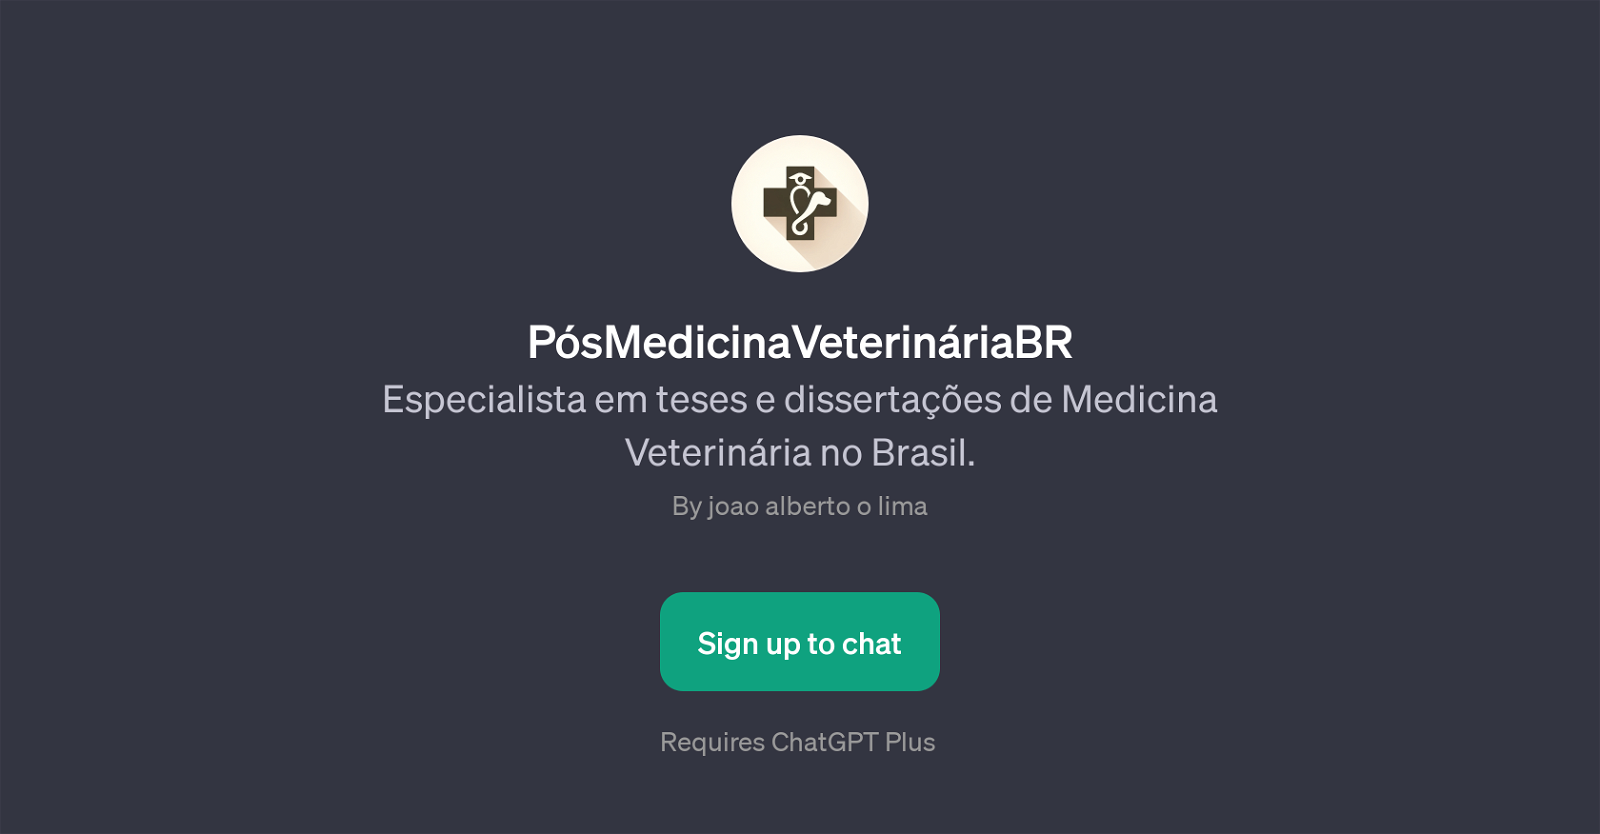 PsMedicinaVeterinriaBR website